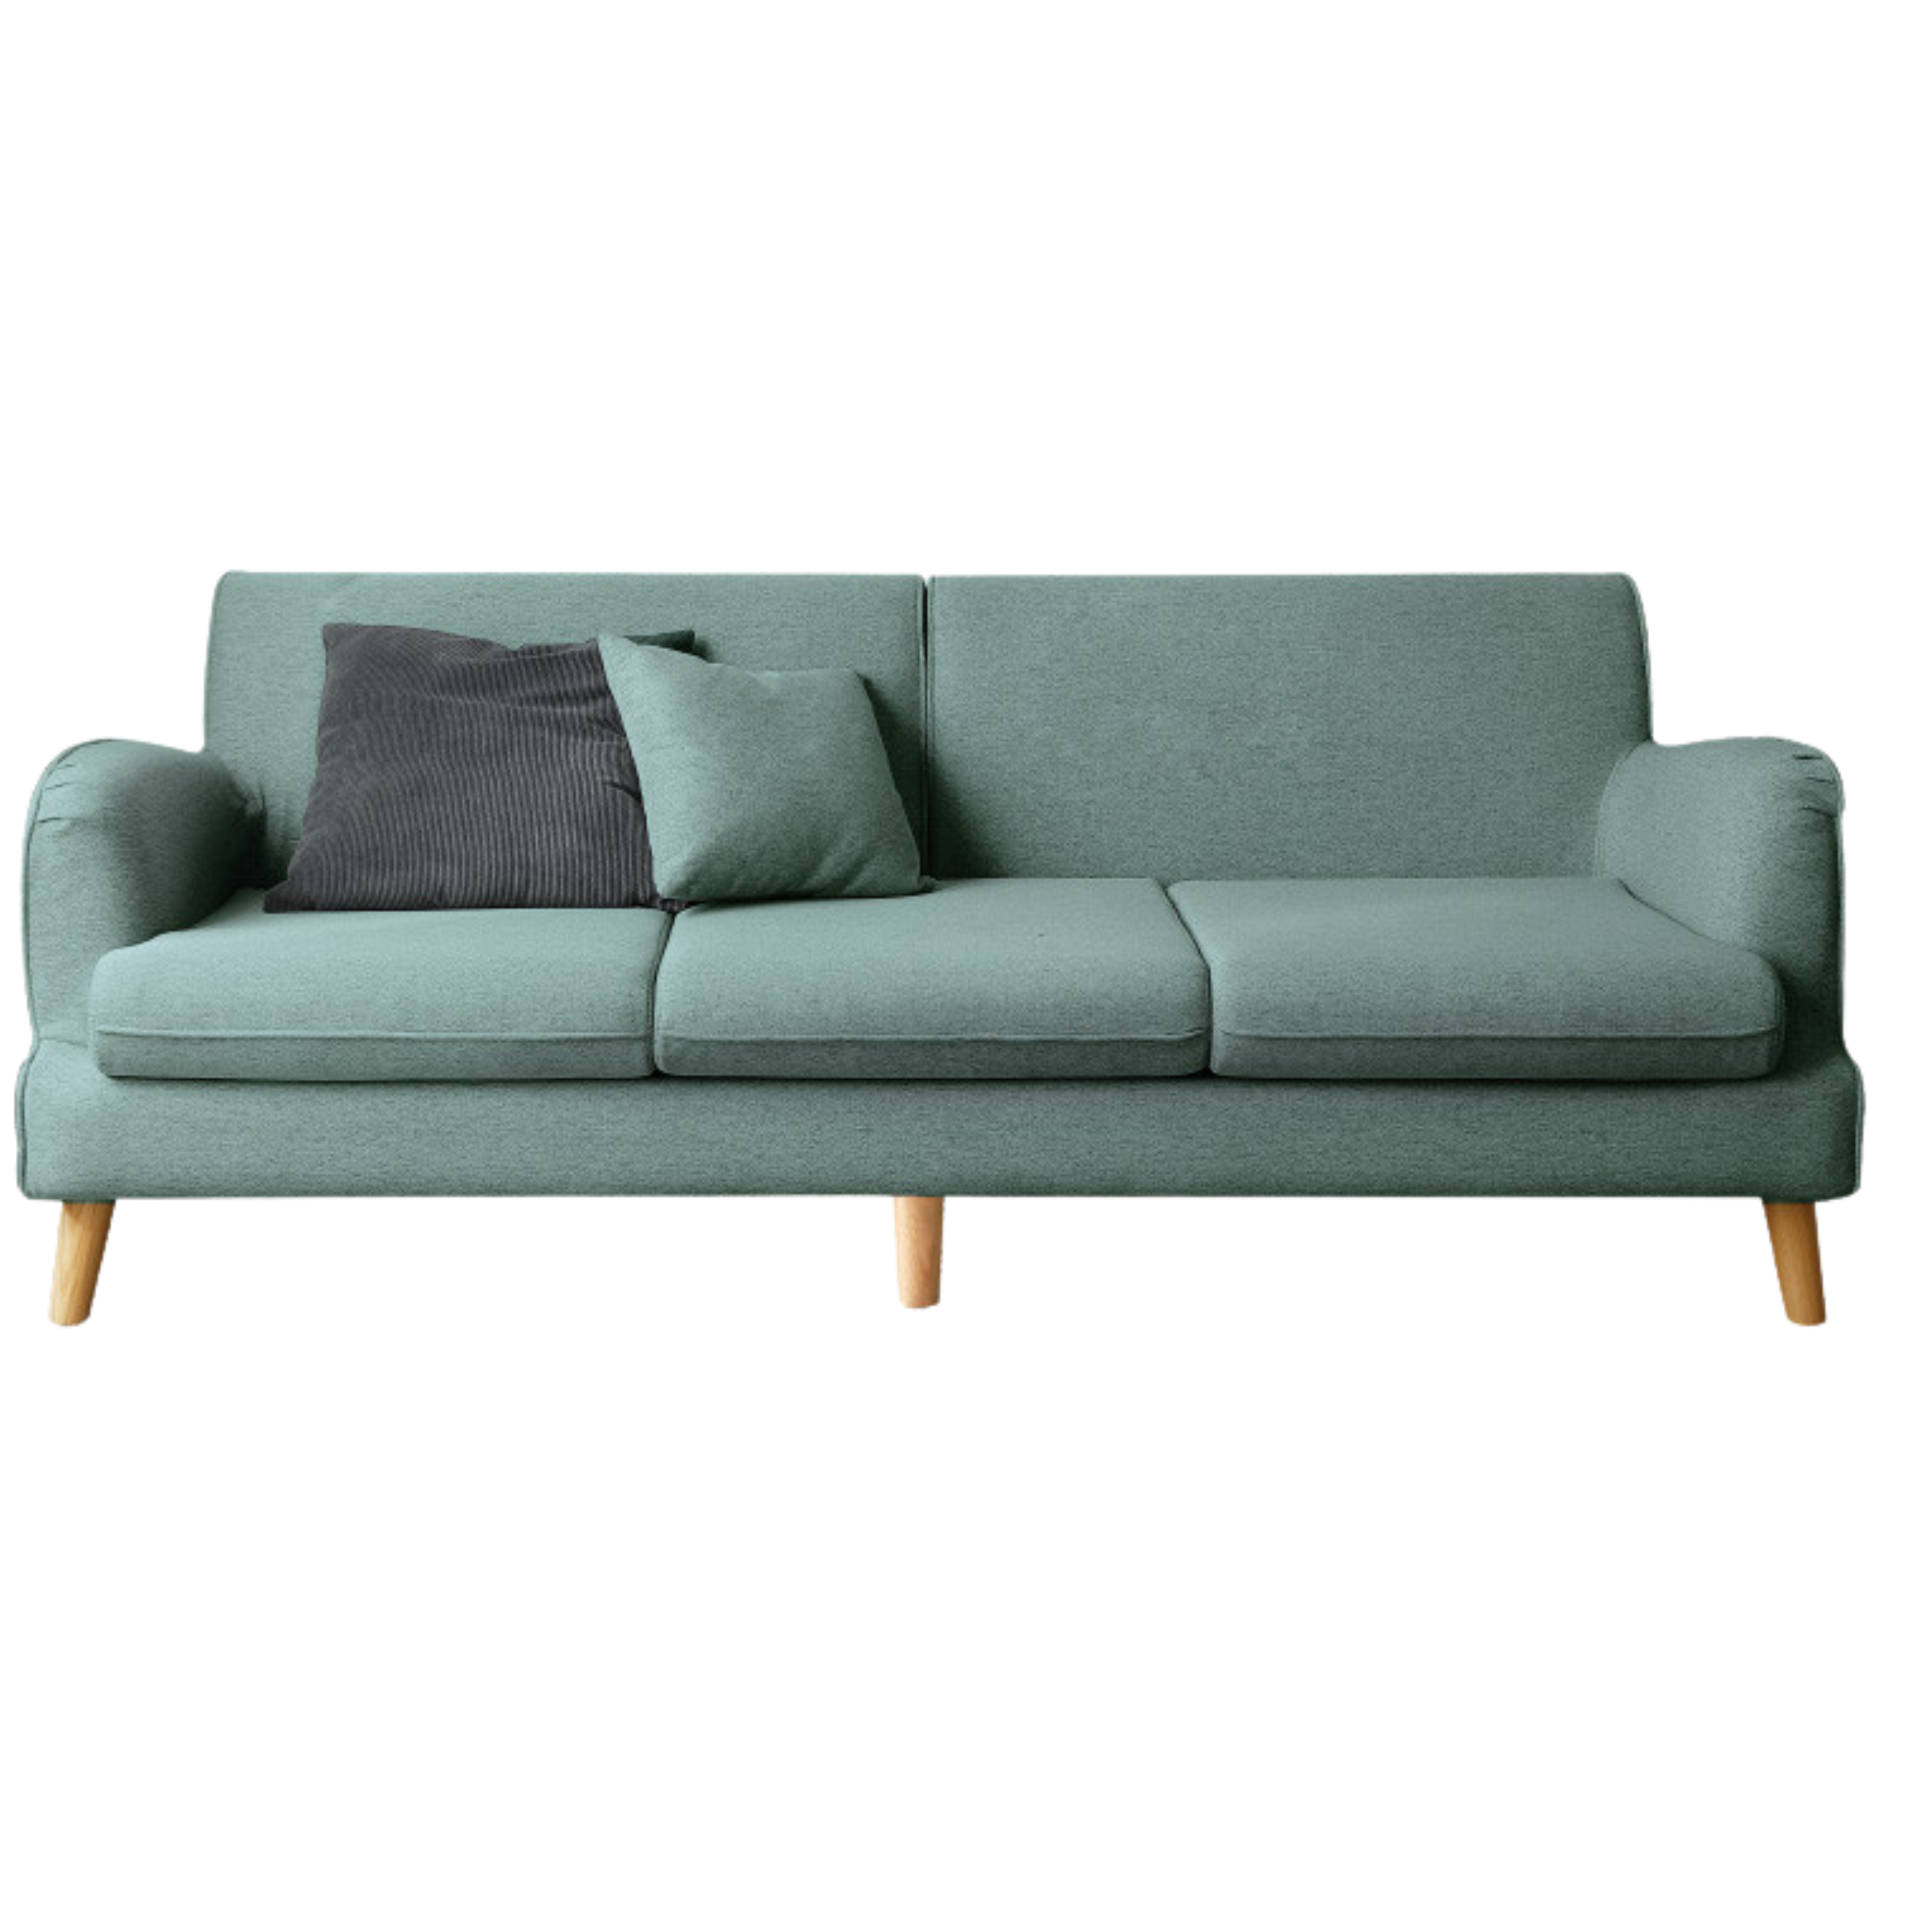 Simple modern fabric sofa)